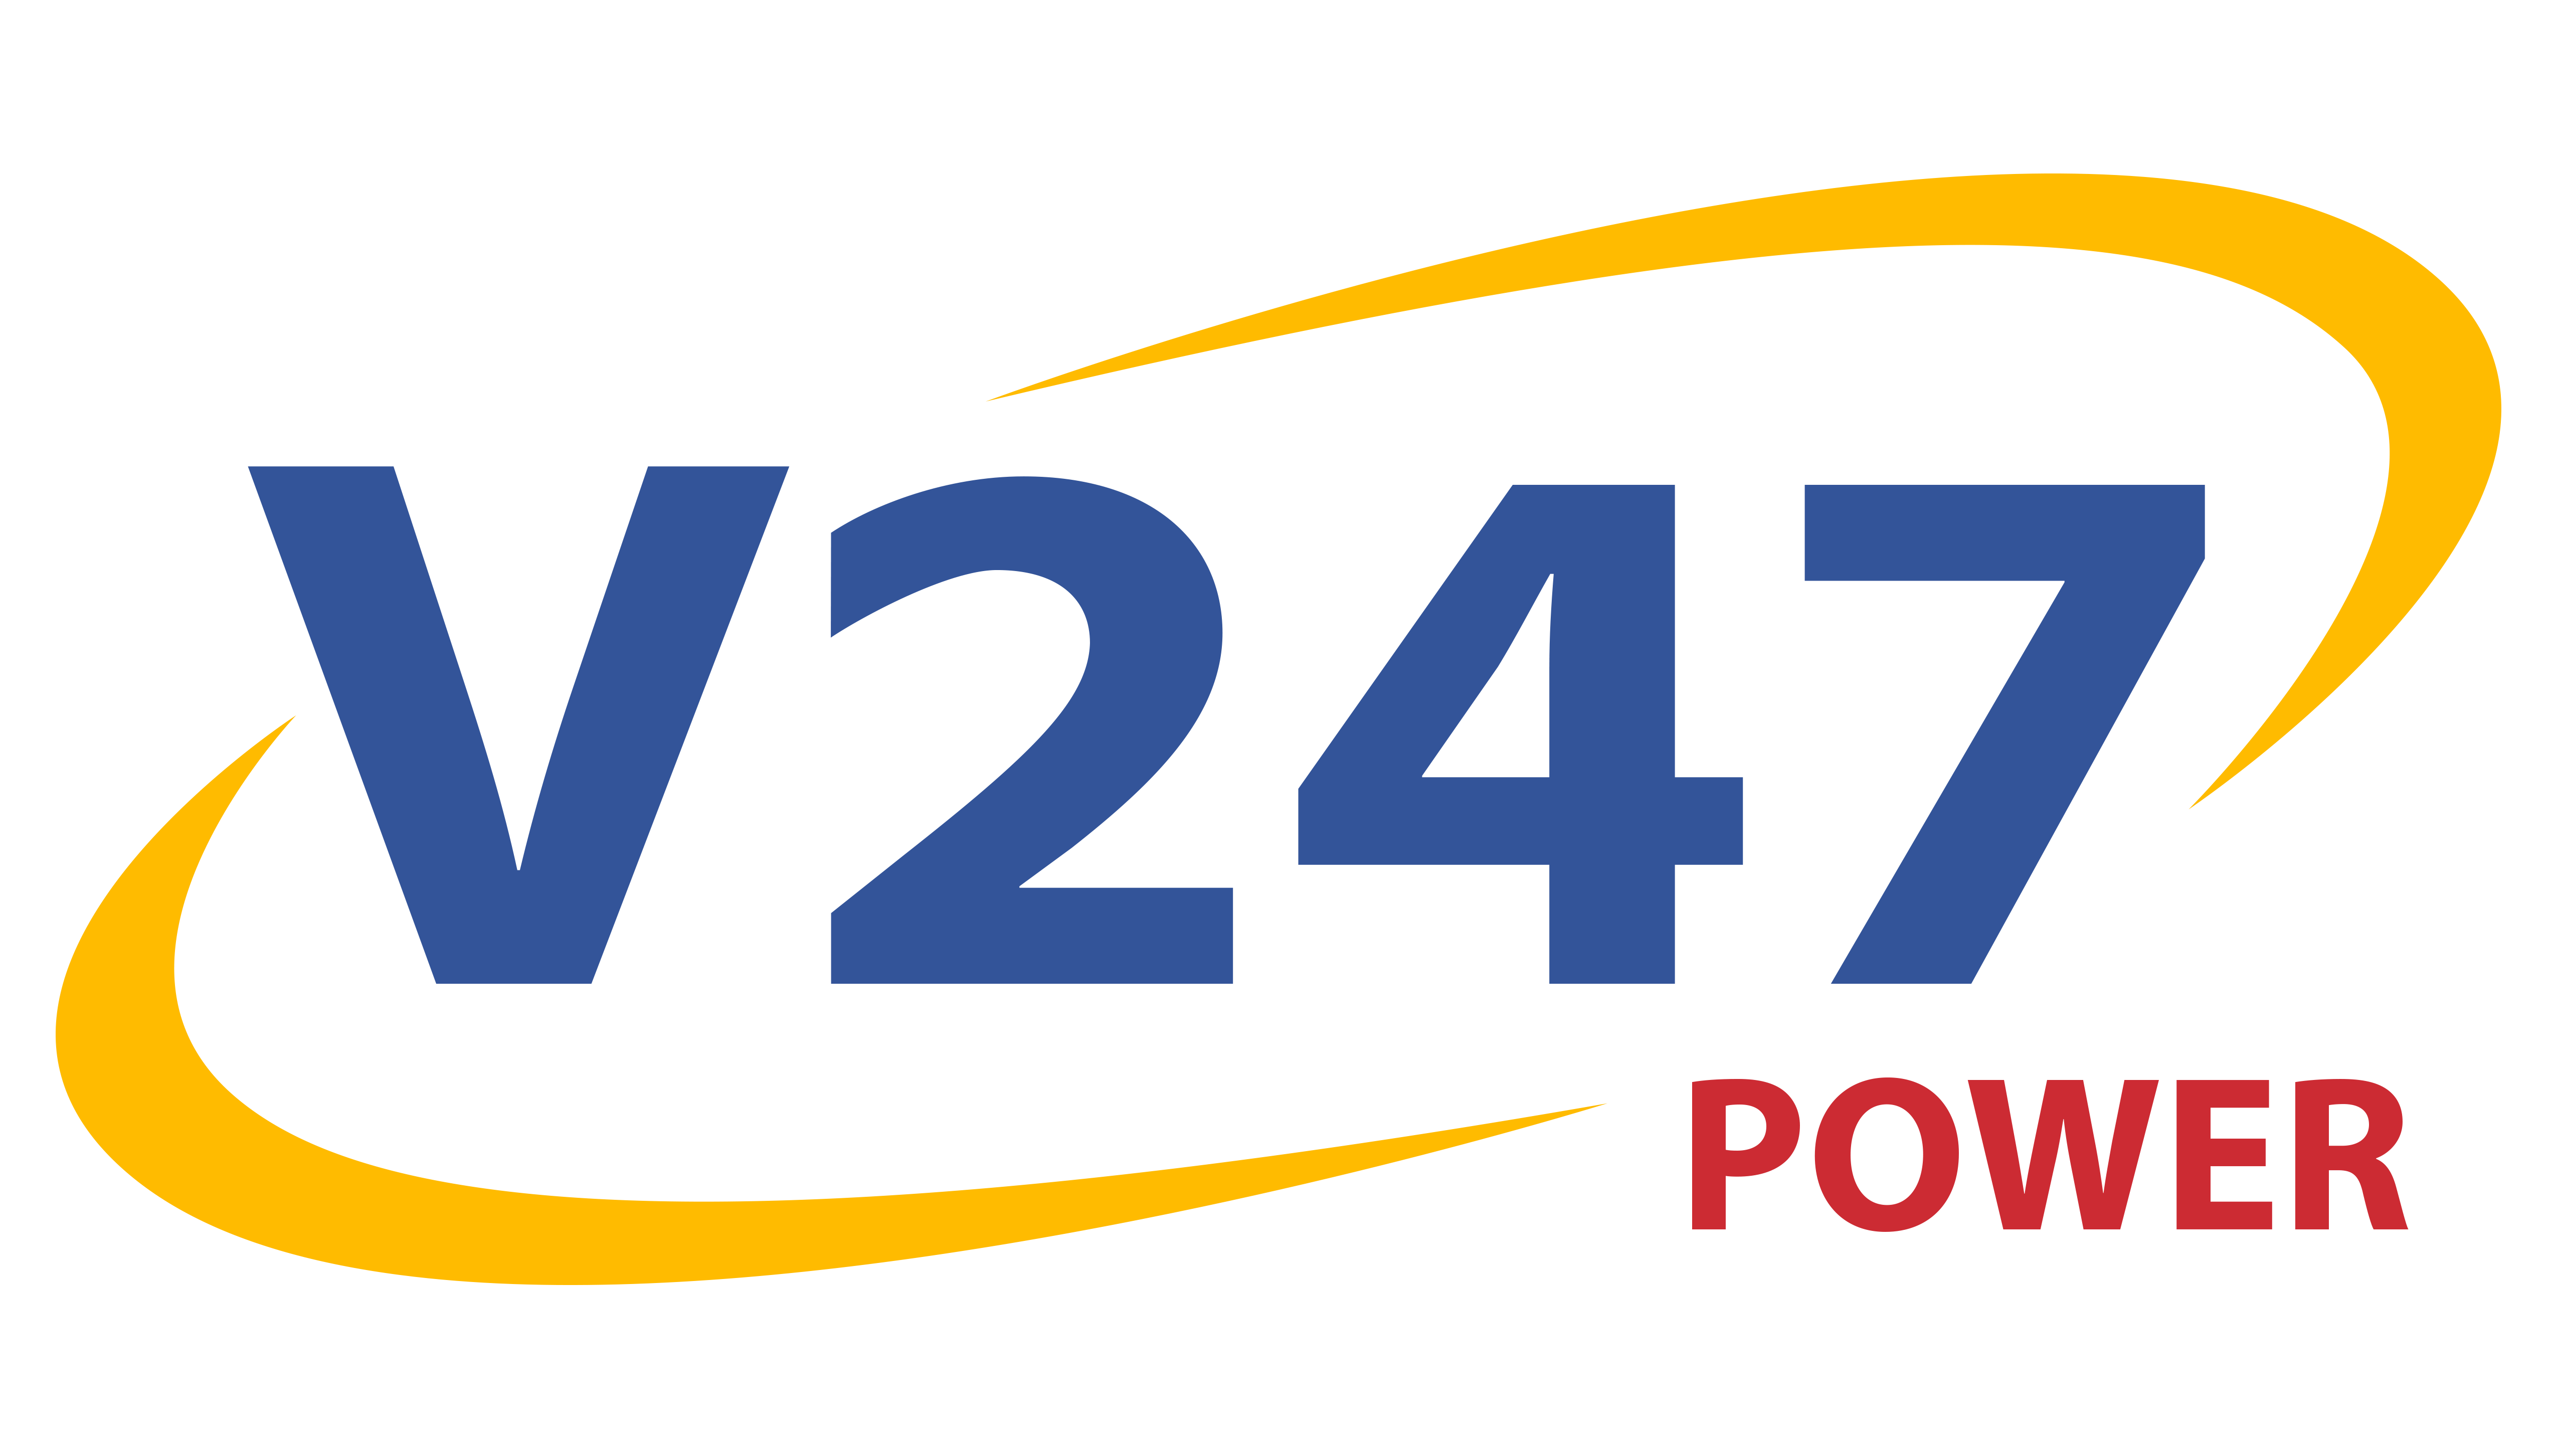 V247 Power